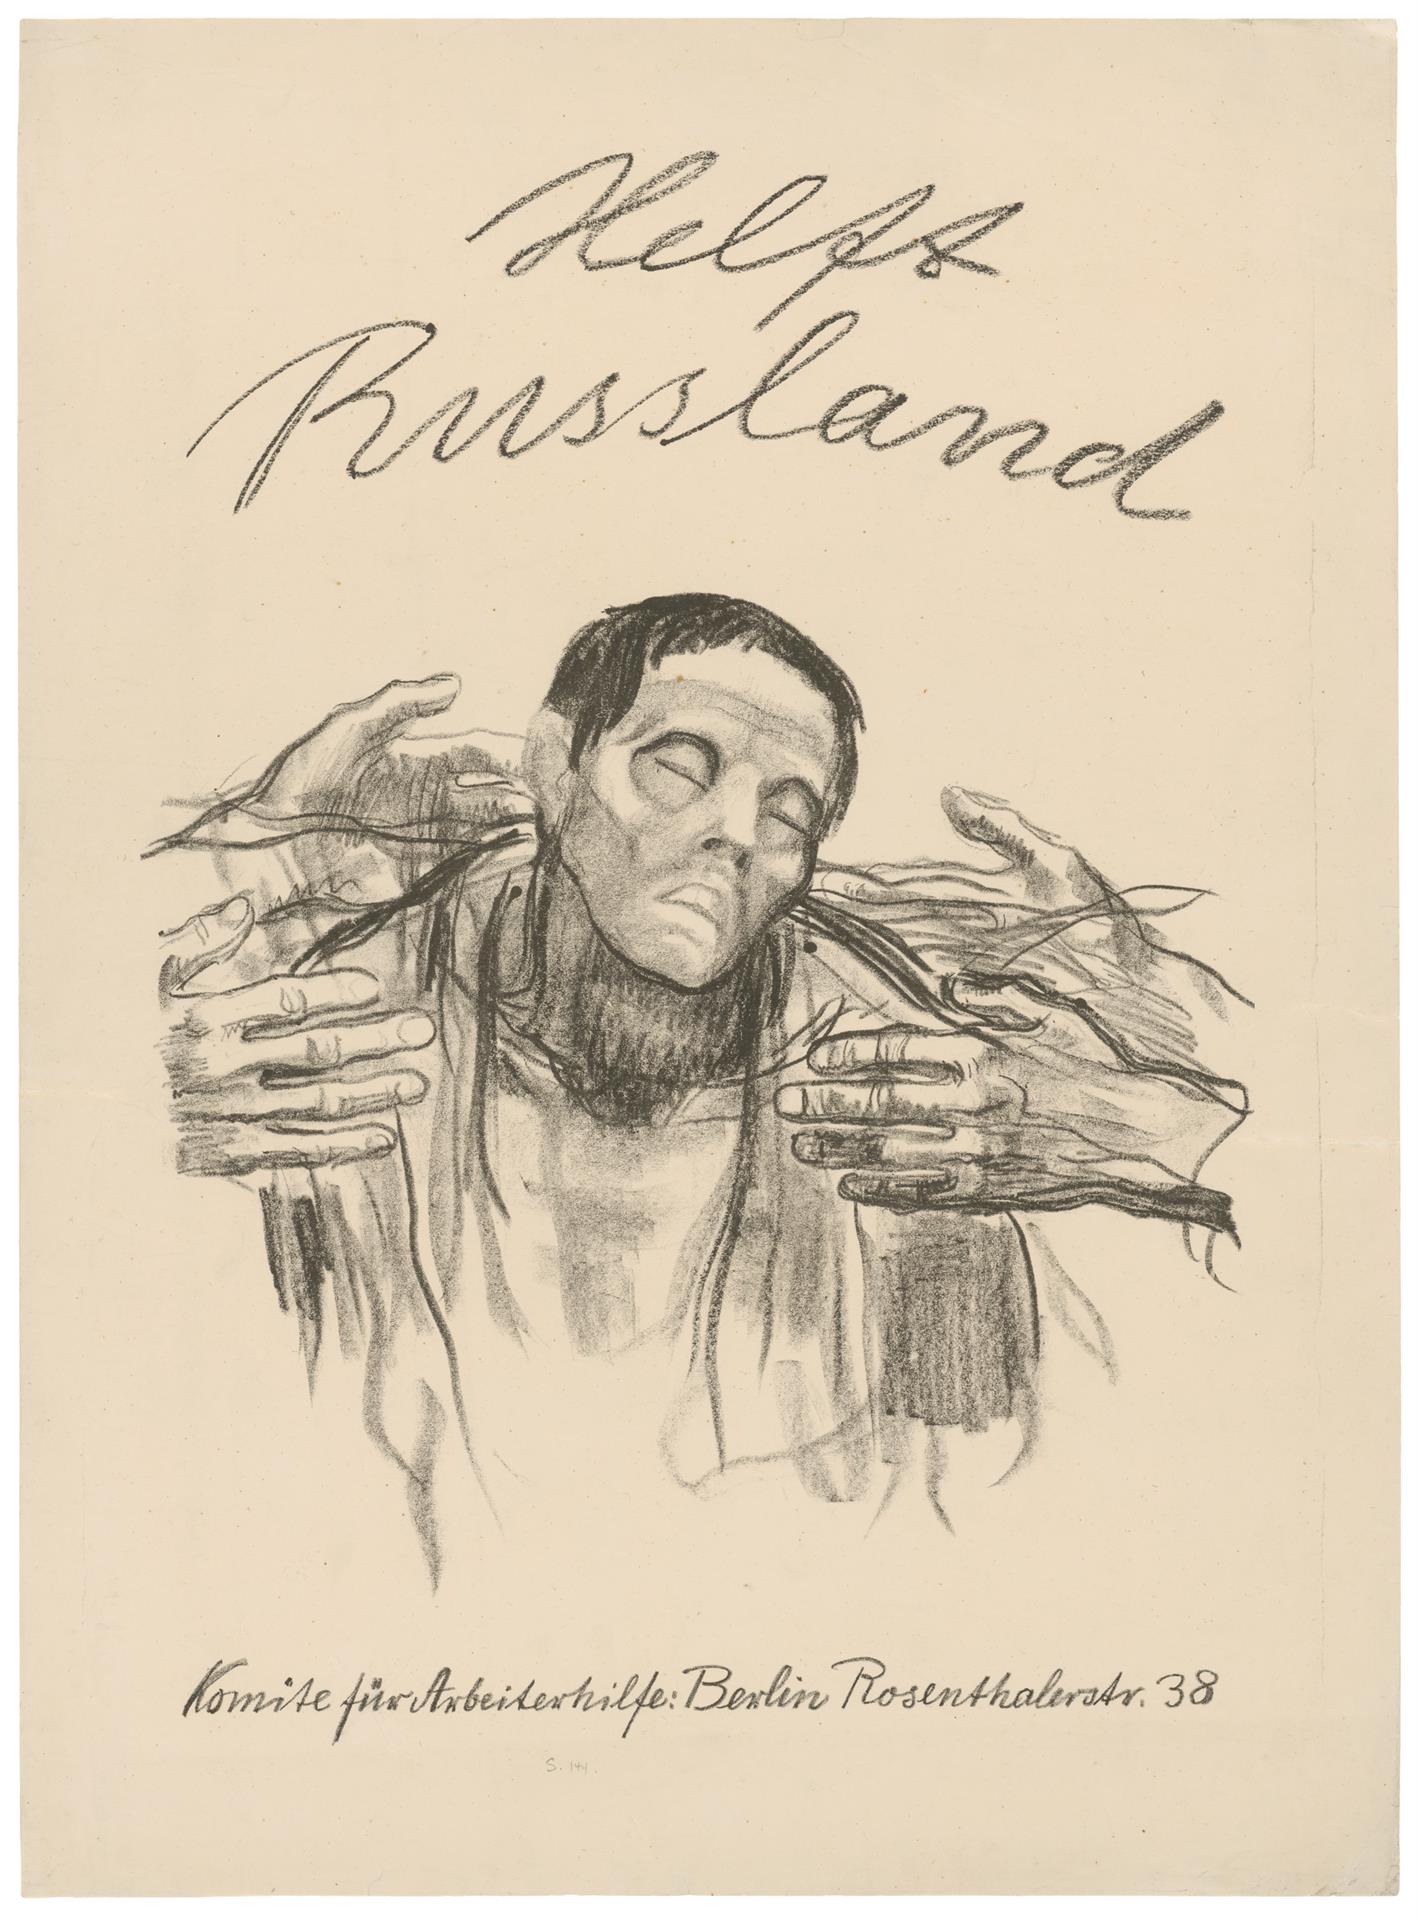 Käthe Kollwitz, Poster »Help Russia«, 1921, crayon lithograph (transfer), Kn 170 A I, Cologne Kollwitz Collection © Käthe Kollwitz Museum Köln